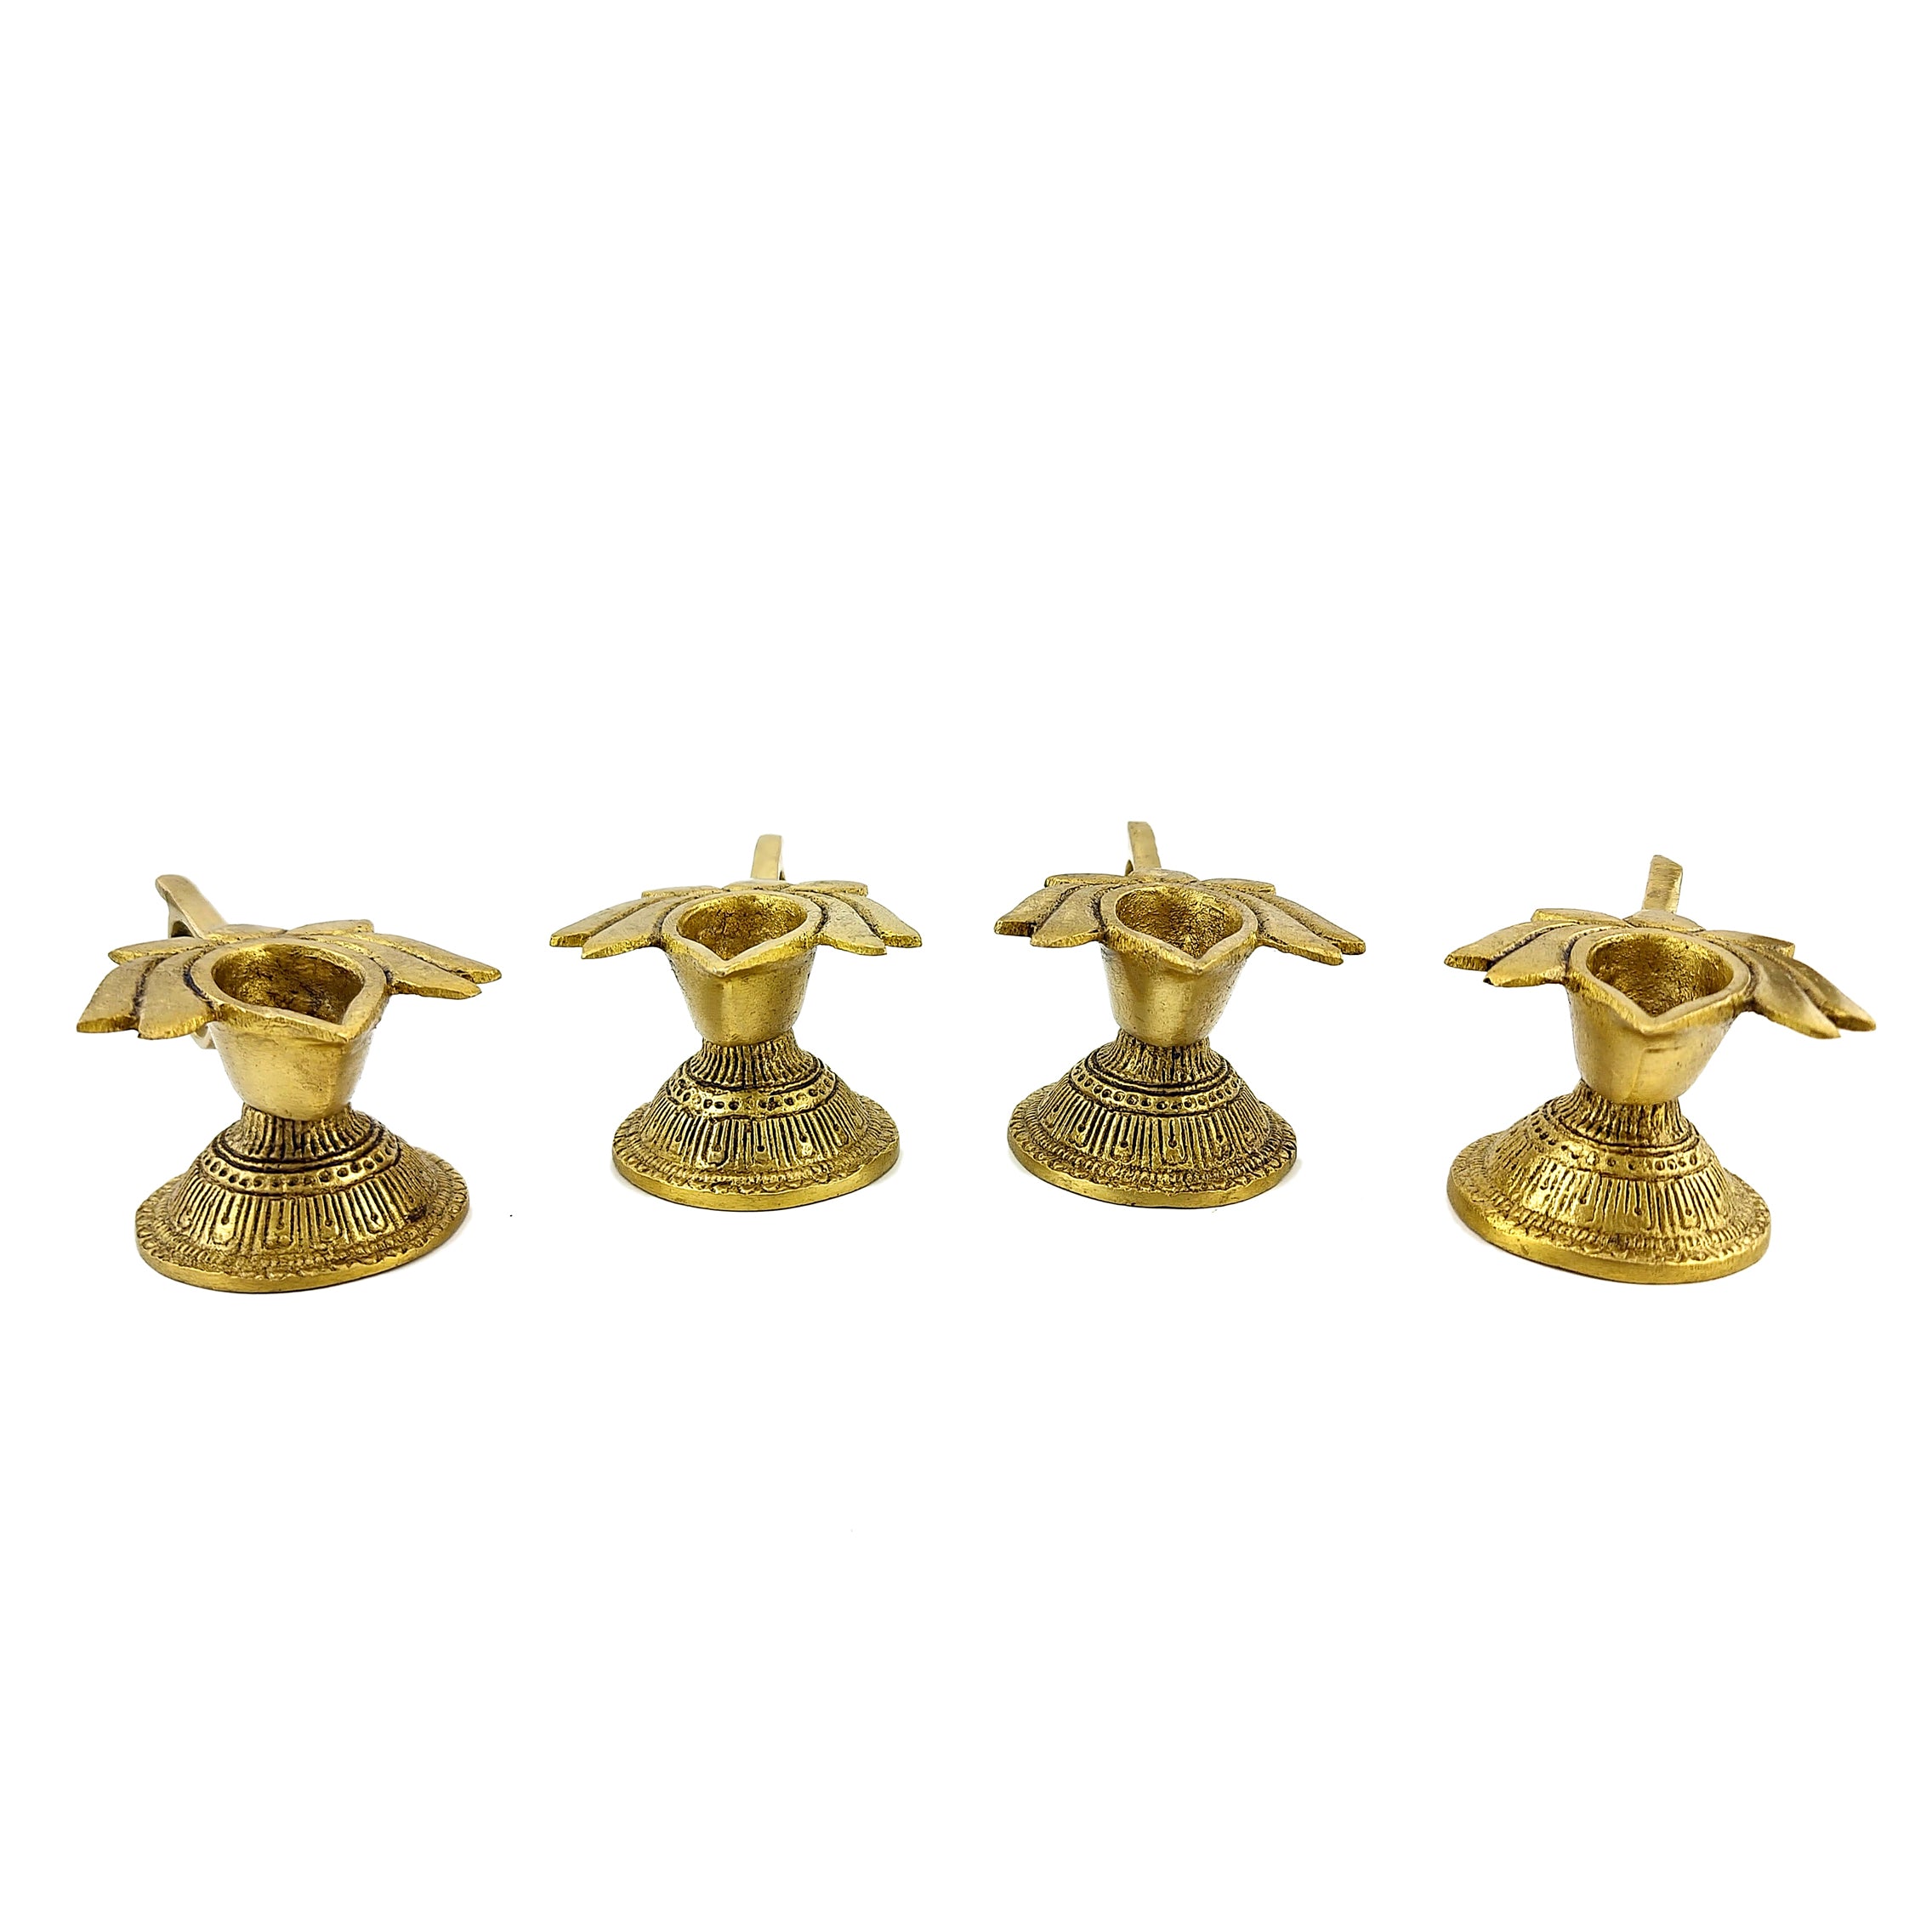 Brass Lotus Diyas with Handle, Brass Diya for Decor, Standard, Pack of 4 Diyas